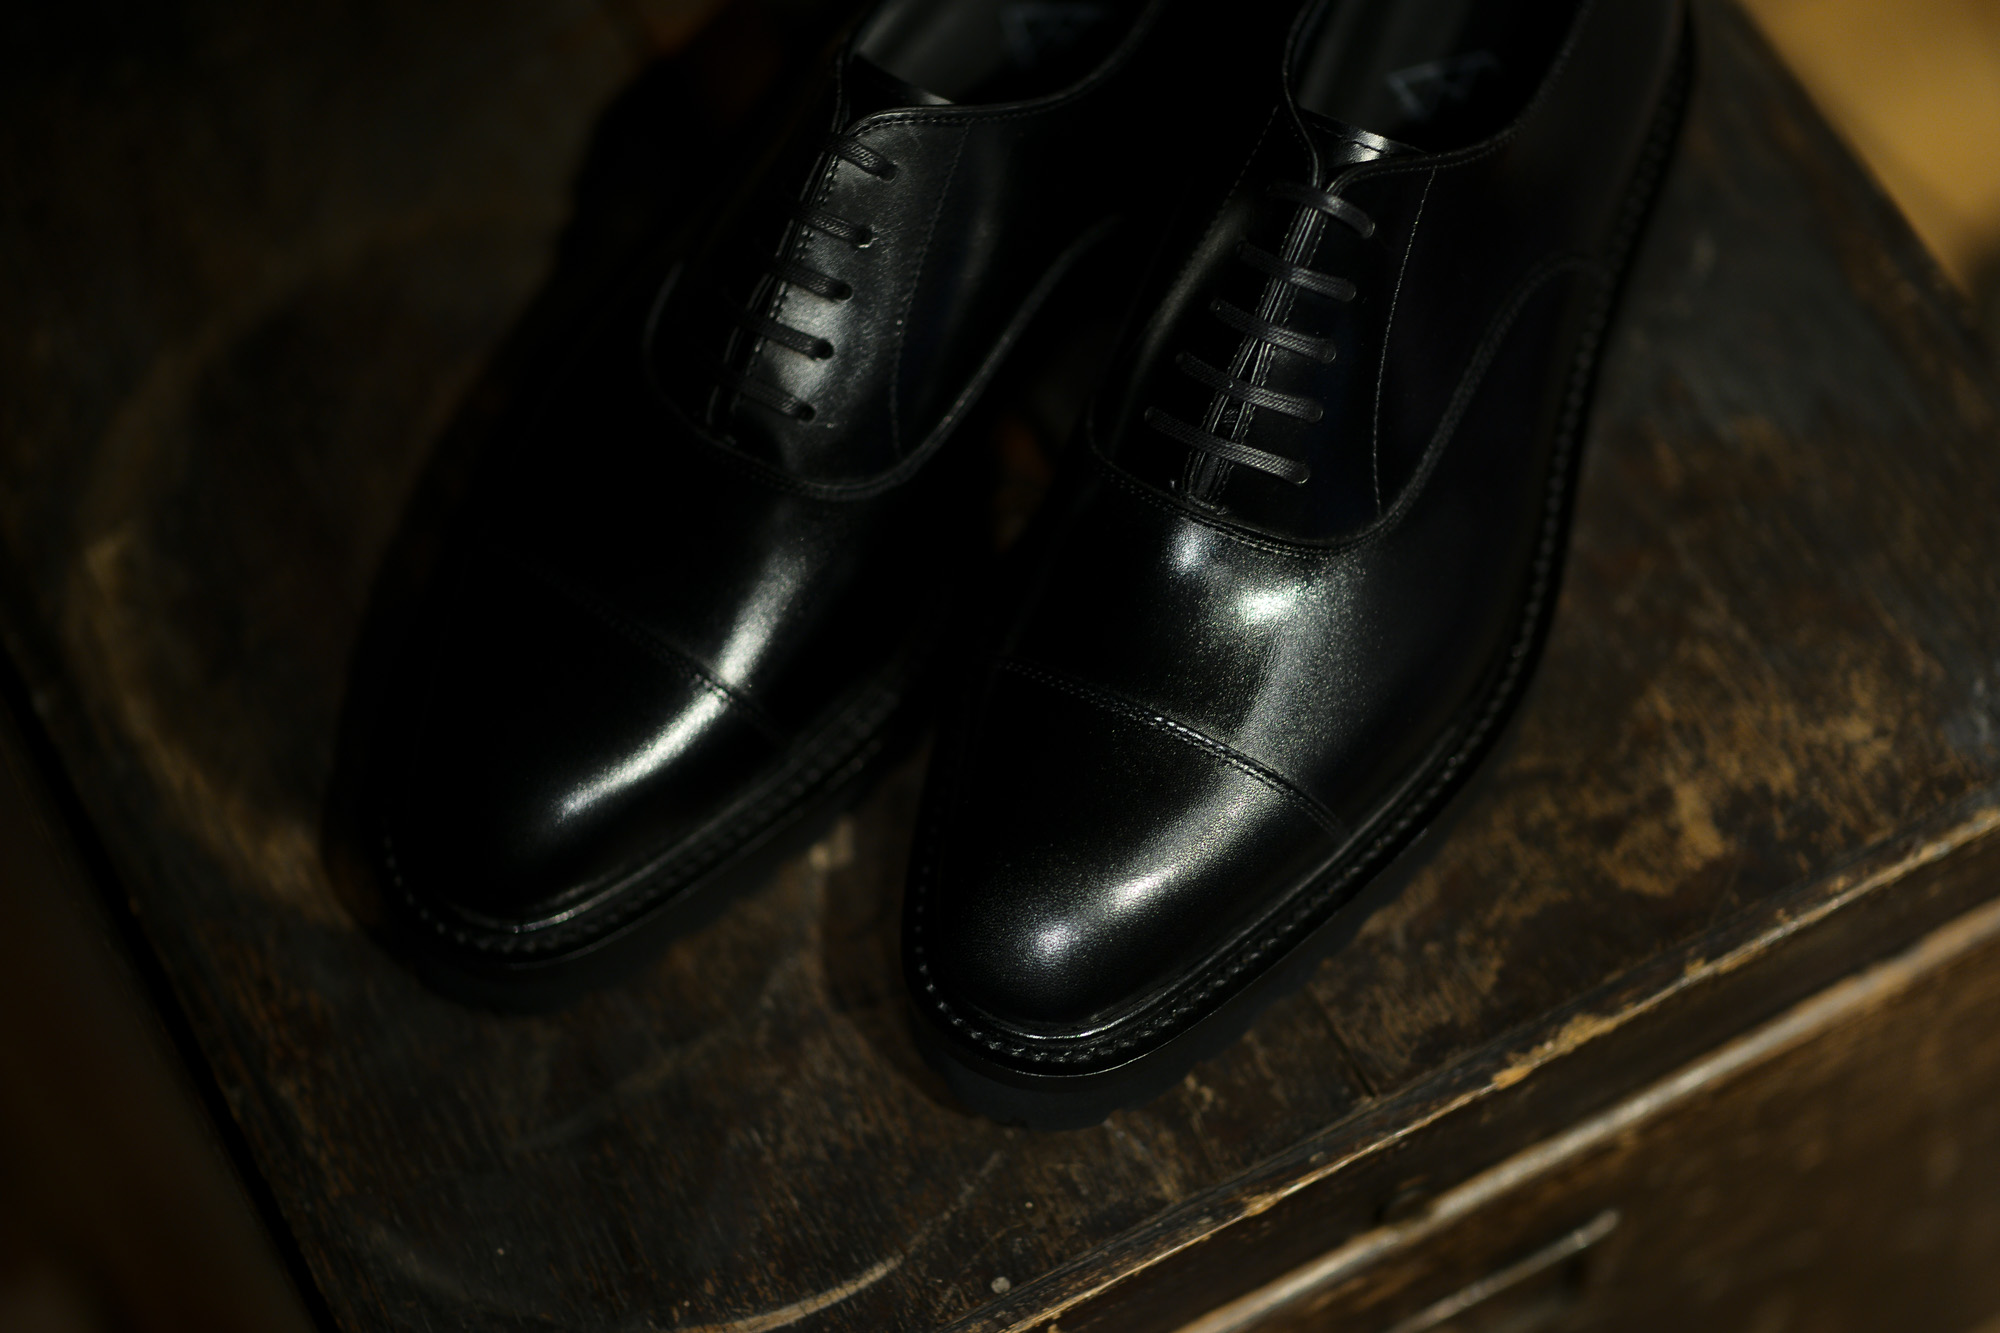 WH (ダブルエイチ) WHS-0110 Straight chip Shoes (干場氏 スペシャル モデル) Trench Last (トレンチラスト) ANNONAY Vocalou Calf Leather ストレートチップ シューズ BLACK (ブラック) MADE IN JAPAN(日本製) 2019 春夏新作【2019春夏フリー分発売中】 干場さん 干場スペシャル FORZASTYLE フォルザスタイル 愛知 名古屋 Alto e Diritto アルト エ デリット